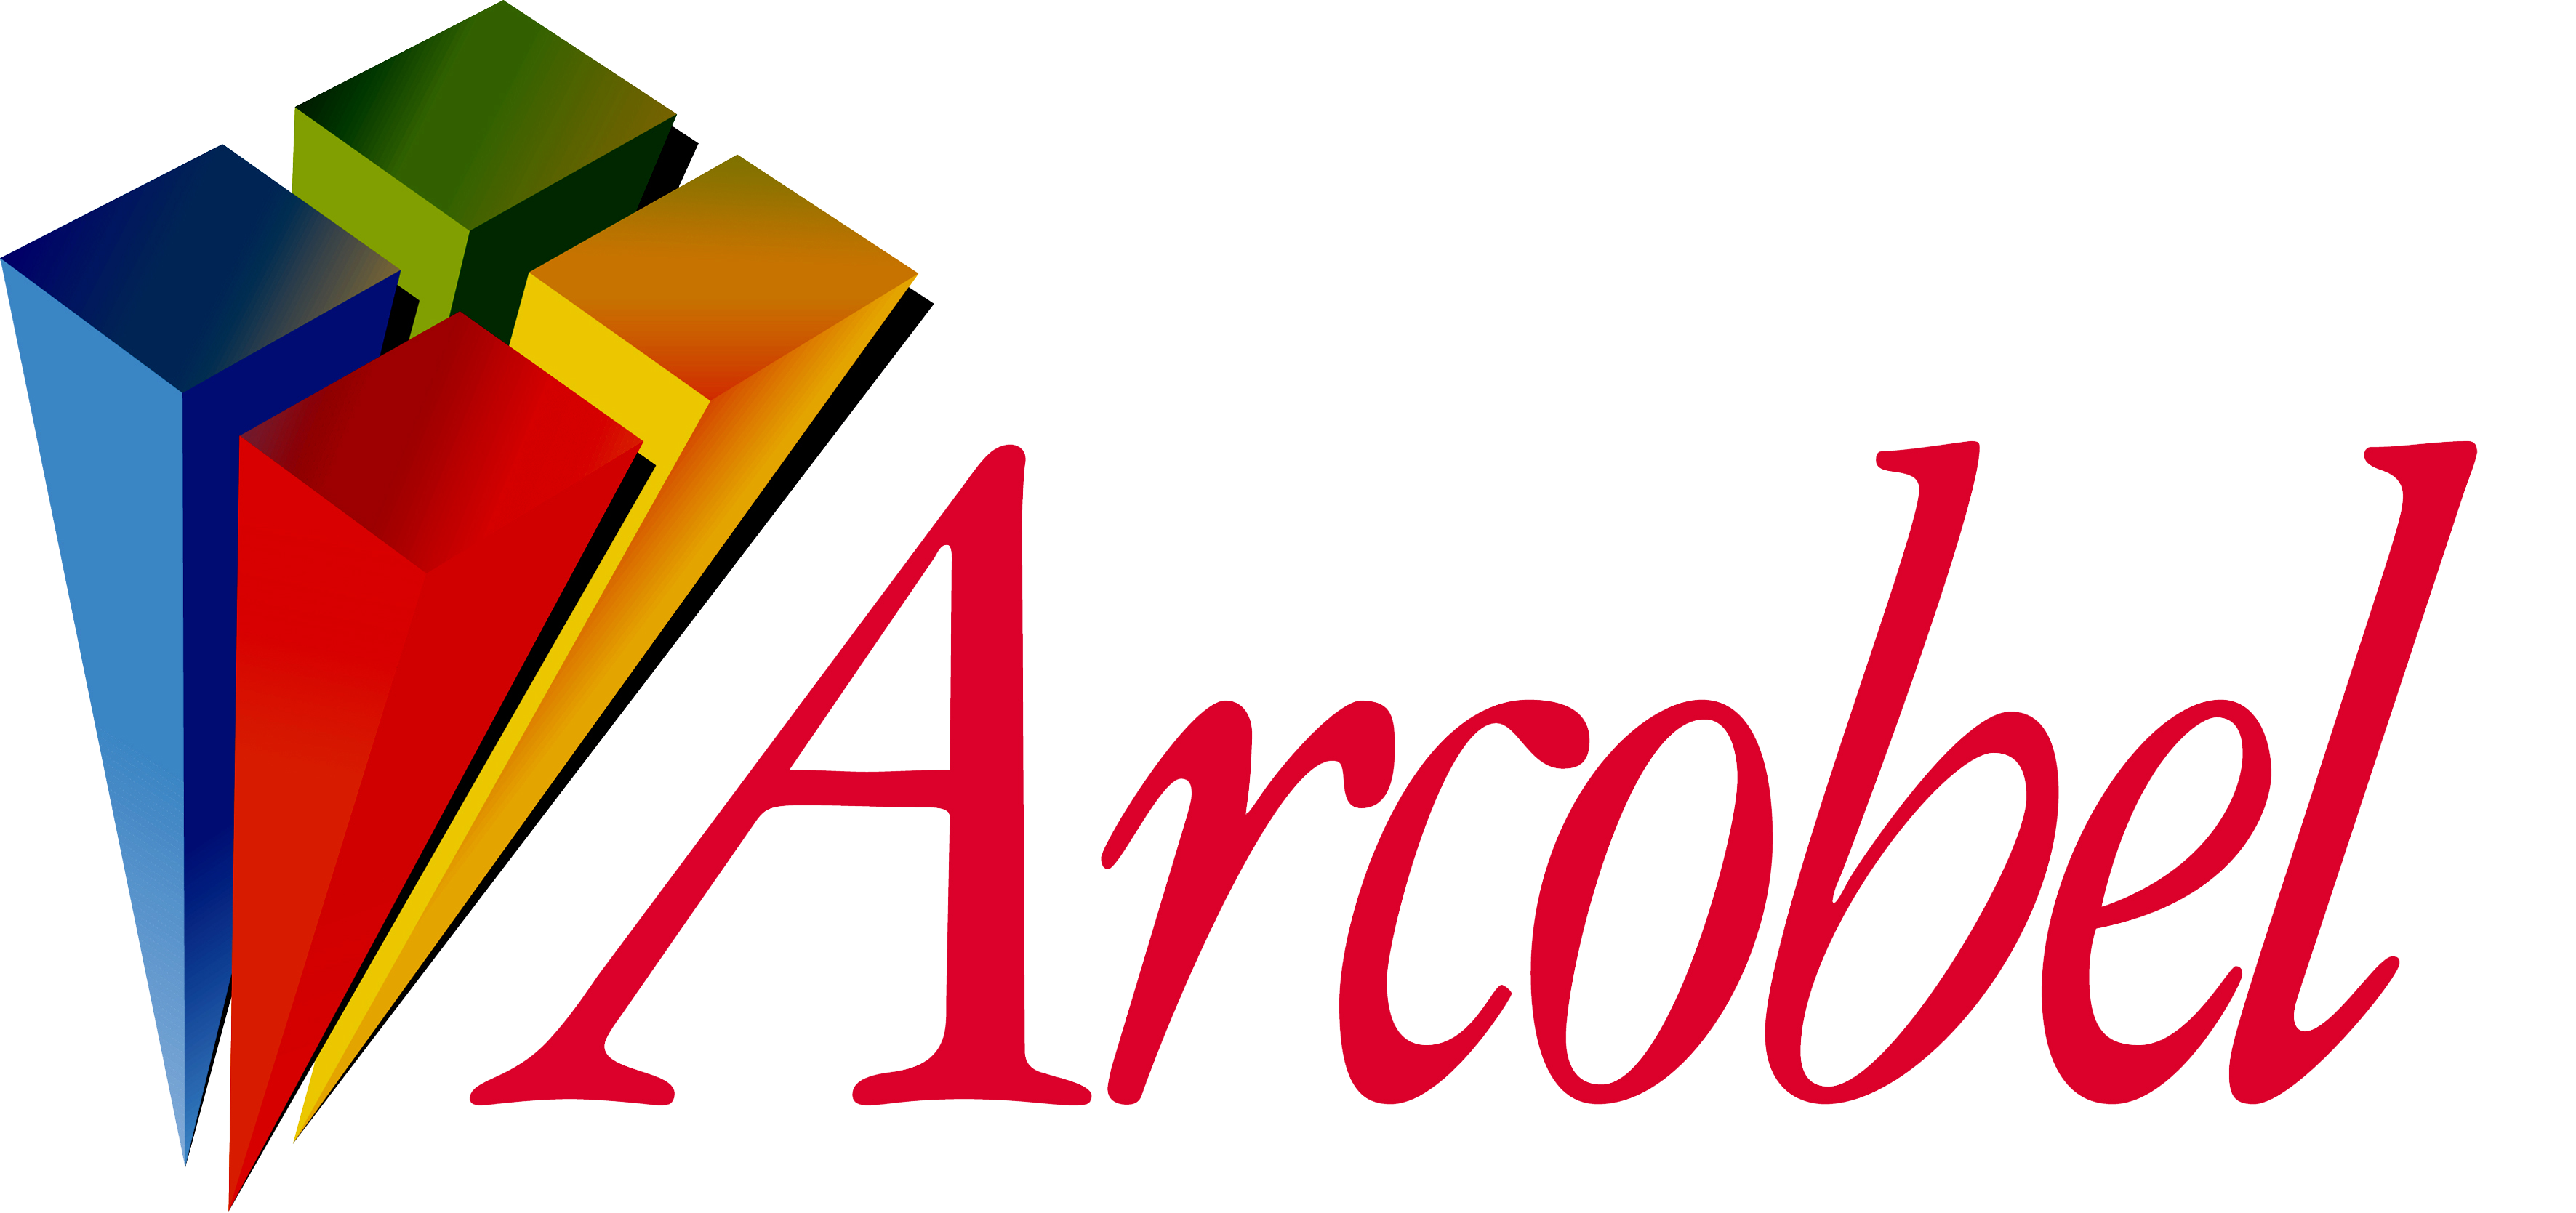 Arcobel Embedded Solutions